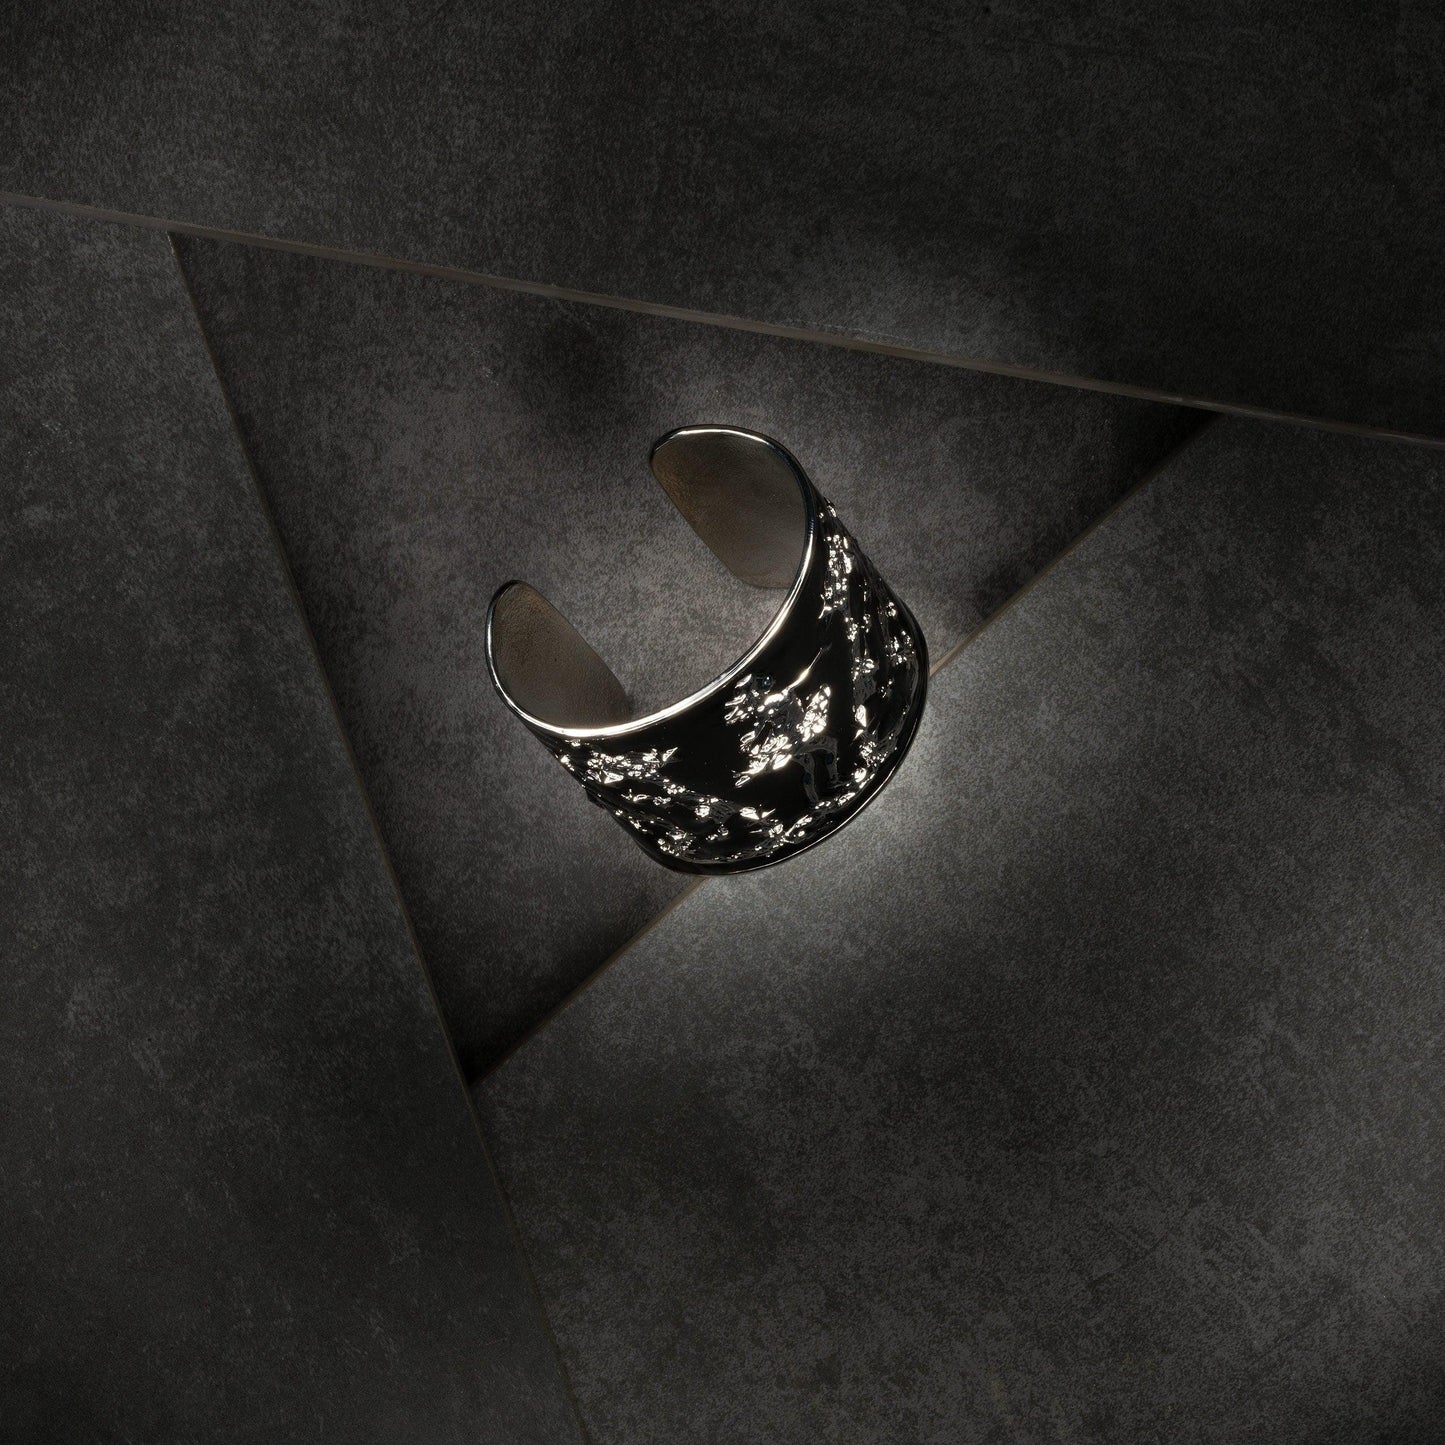 "She Moves The Stars" Bracelet Cuff - Silver & Black - Angela Mia Jewelry